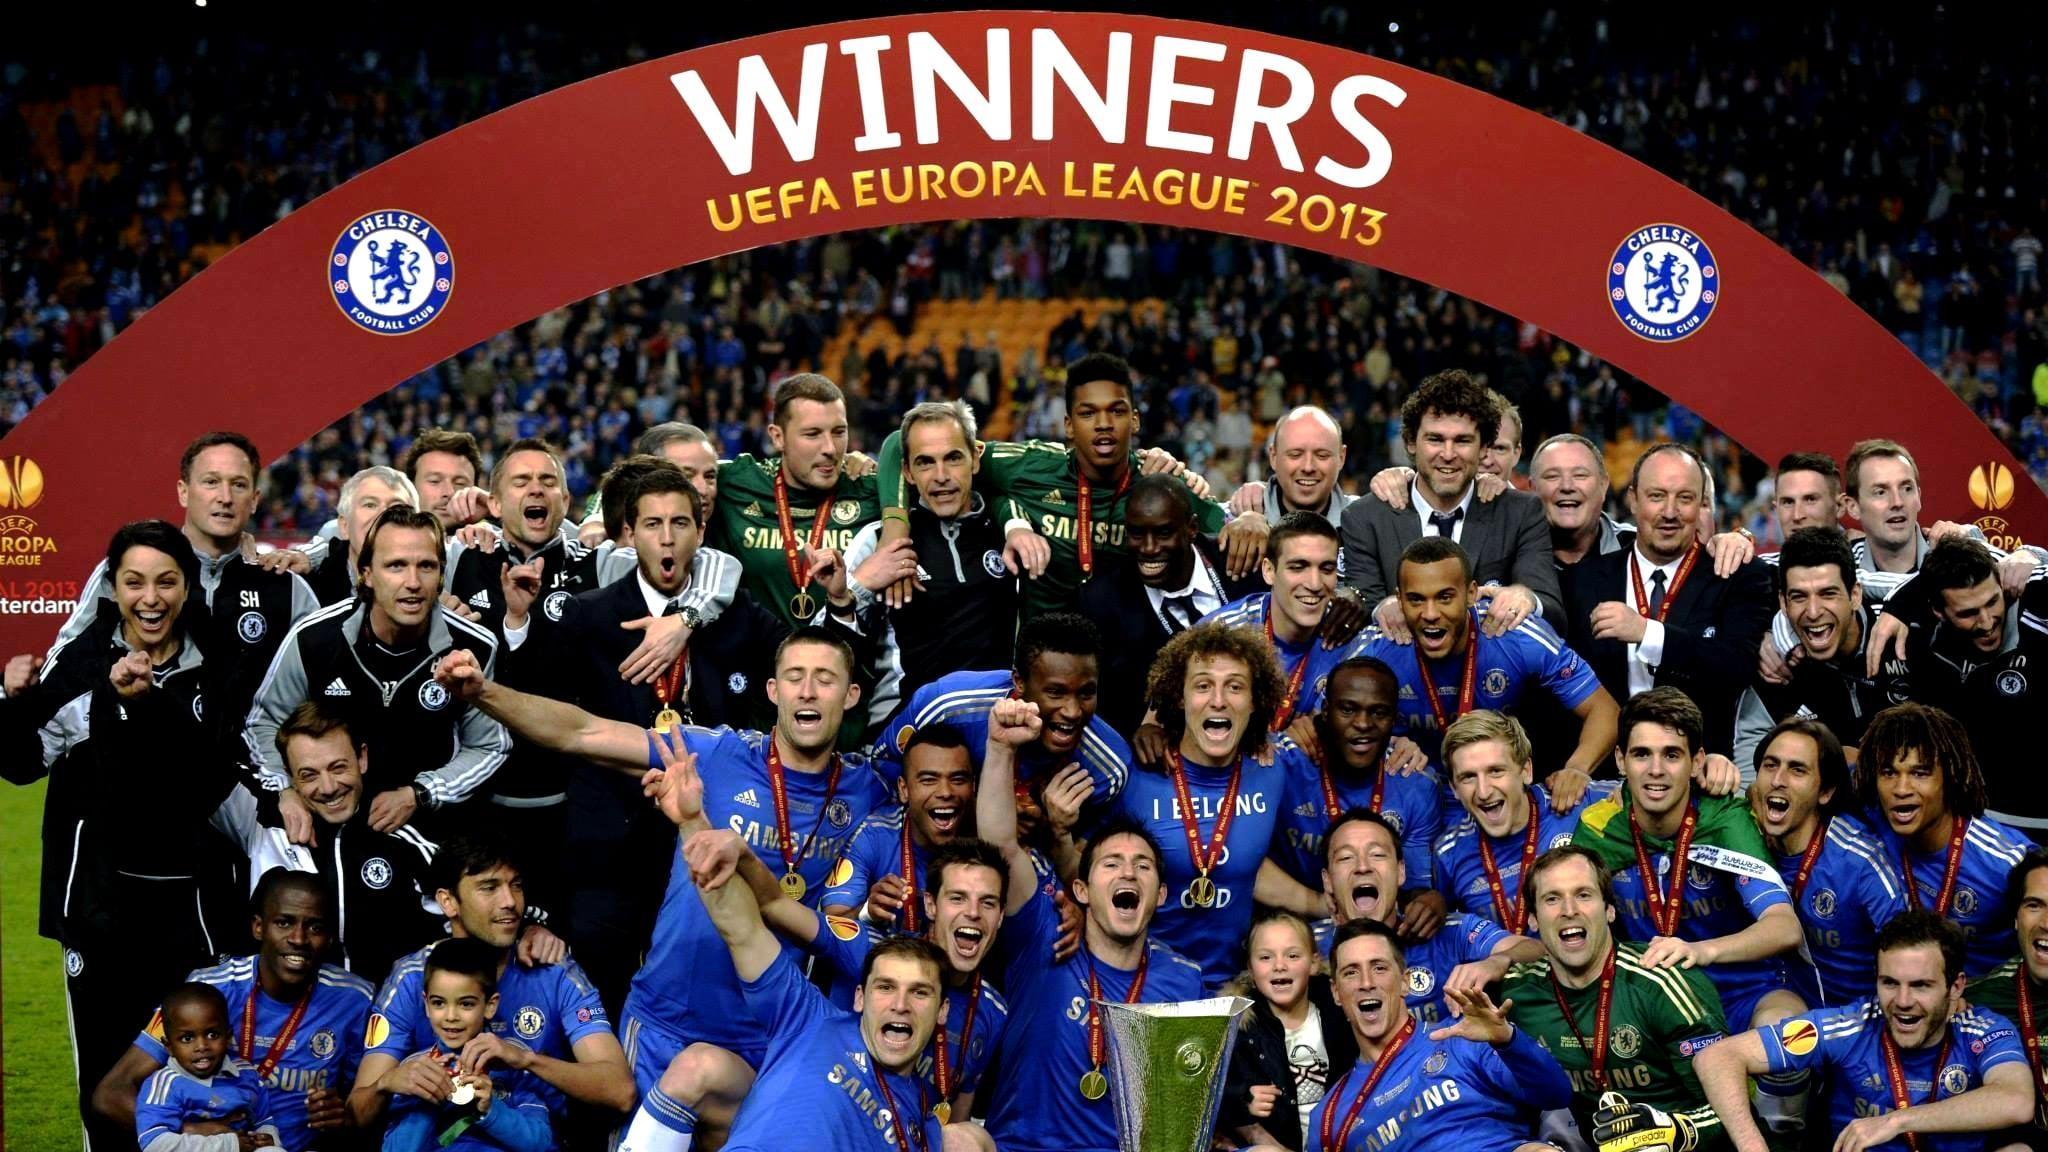 Chelsea FC - Season Review 2012/13 backdrop